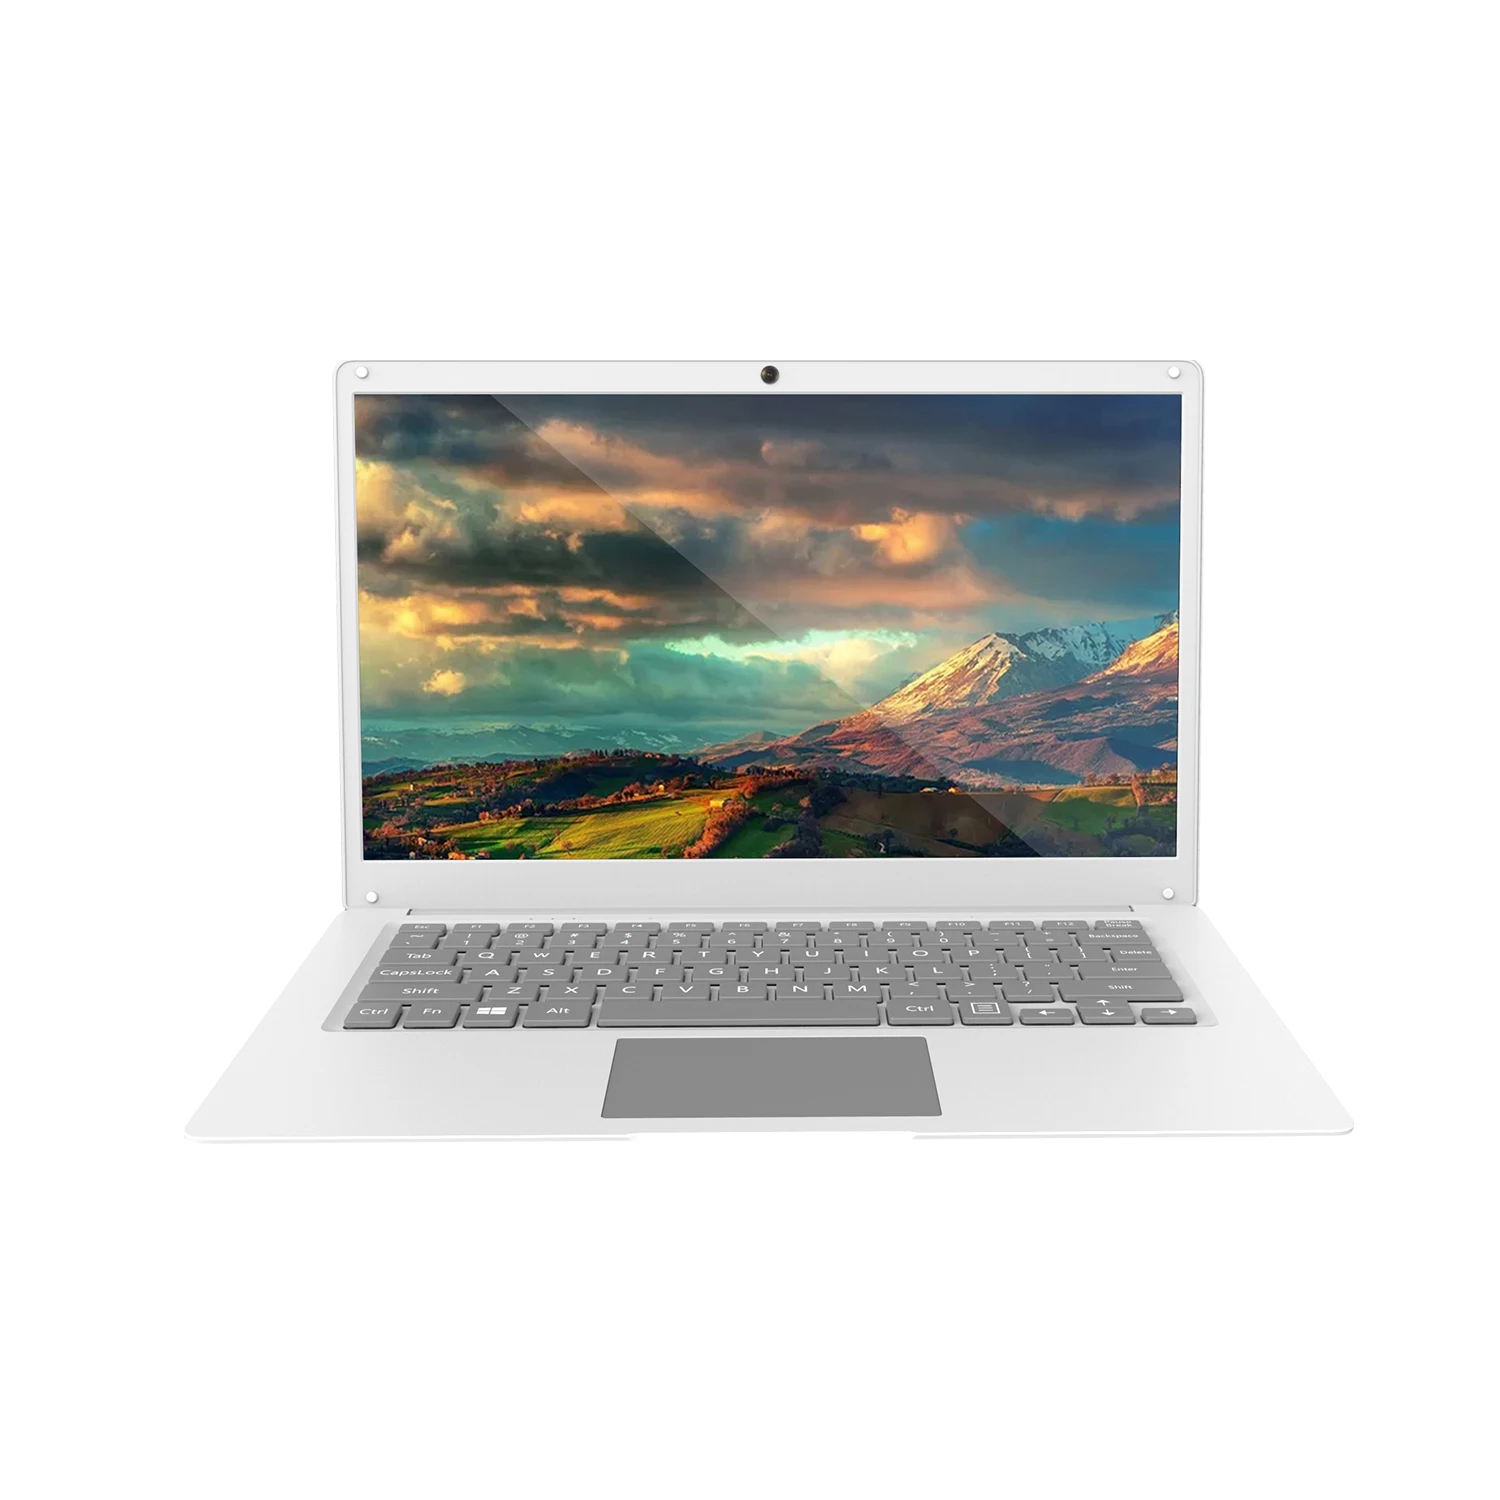 

New 14.1 inch thin laptop ITEL Apollo Lake N3350 Window 10 PC Portable 1920*1080 IPS Thin Laptop